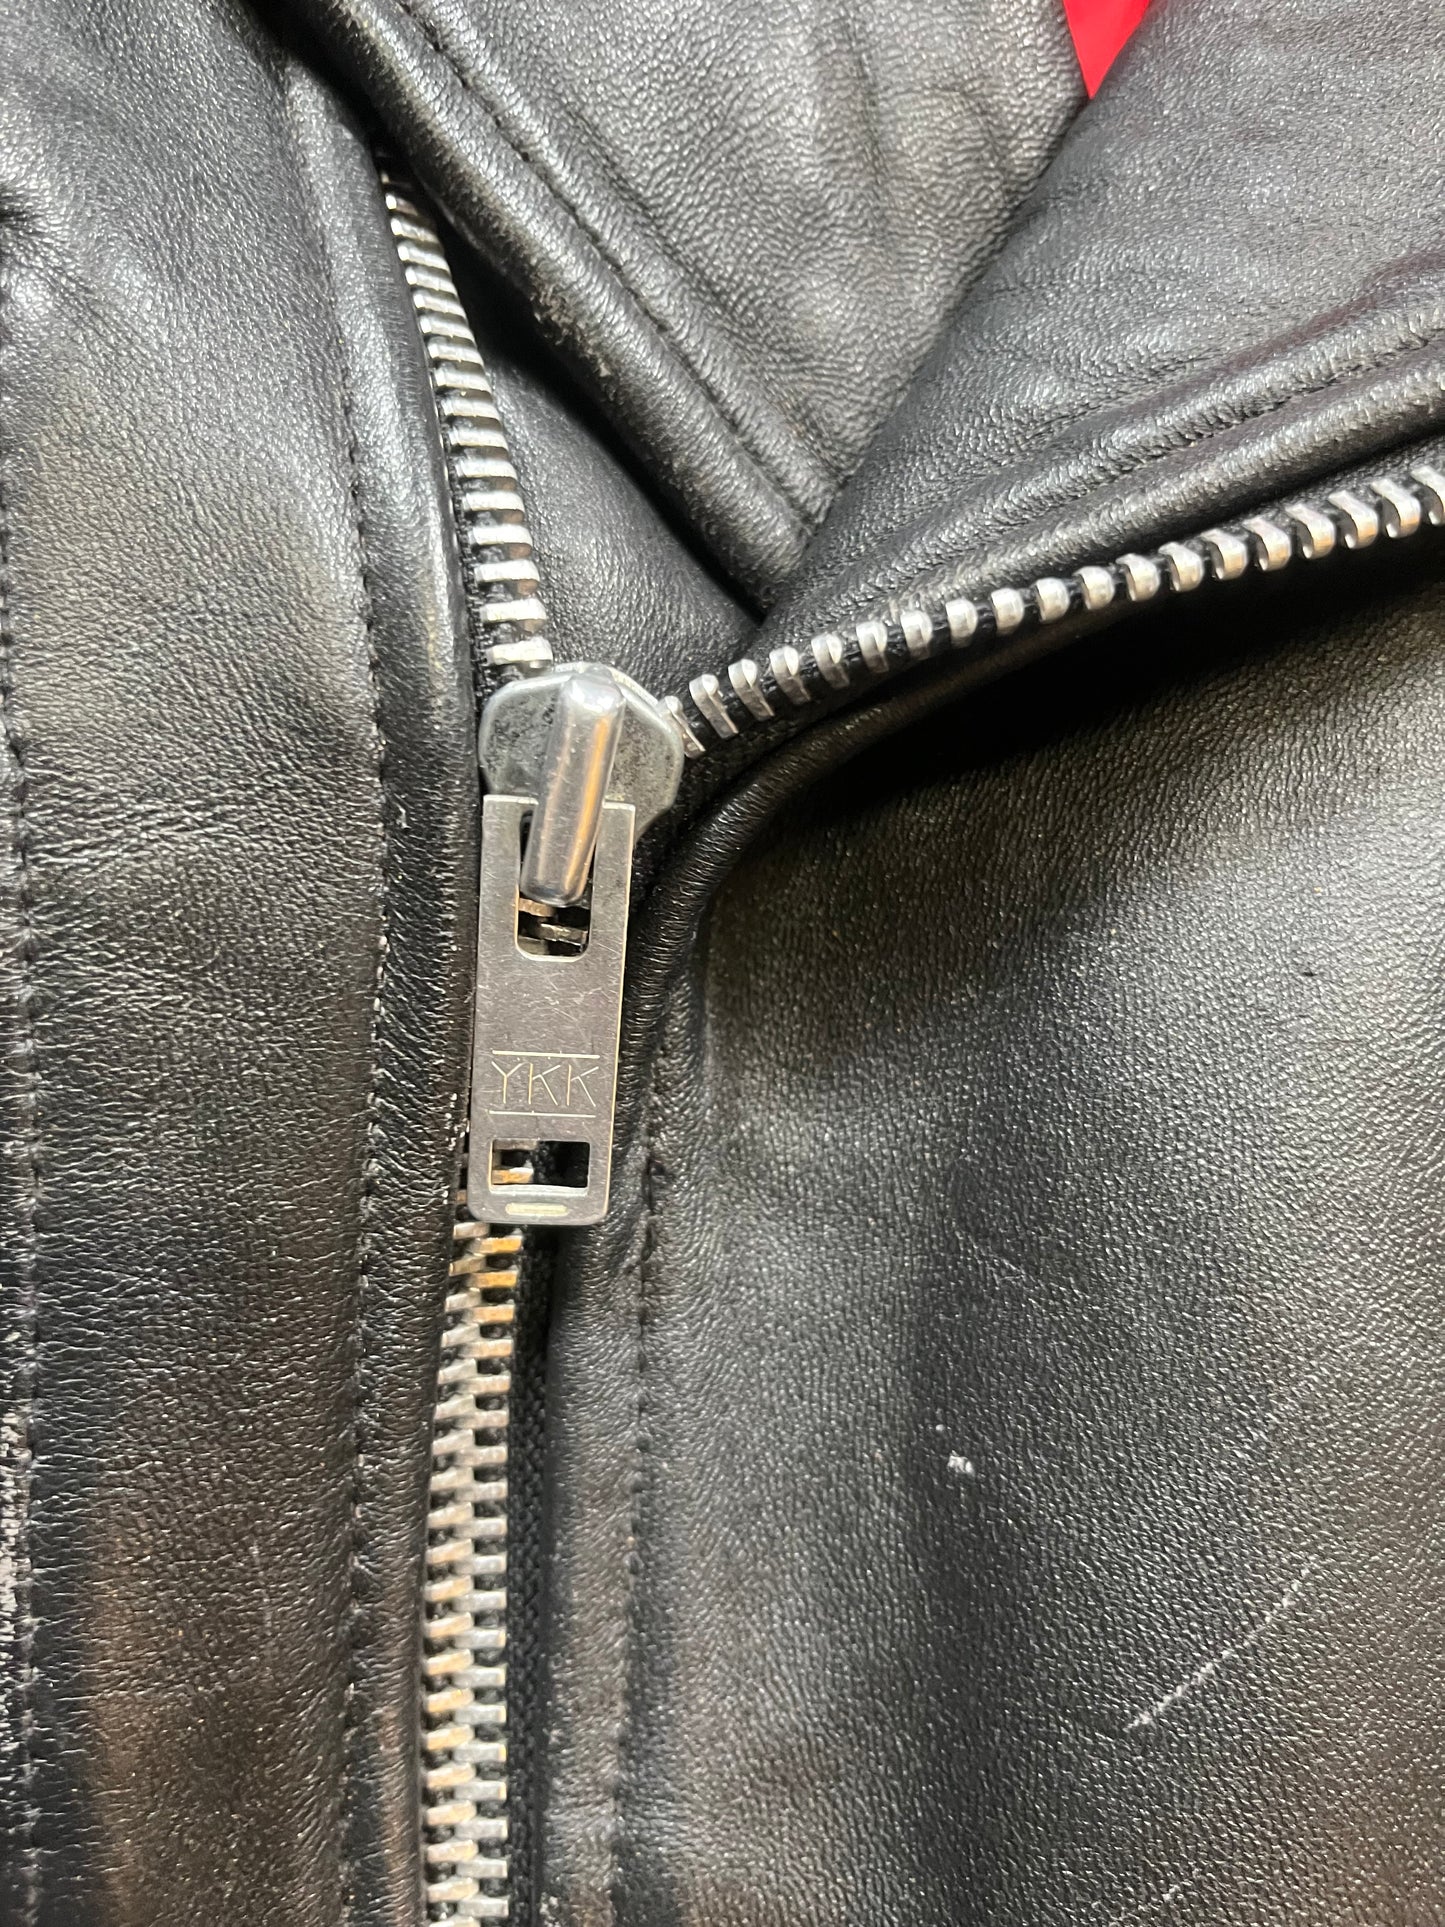 70s/80s Leather Jacket